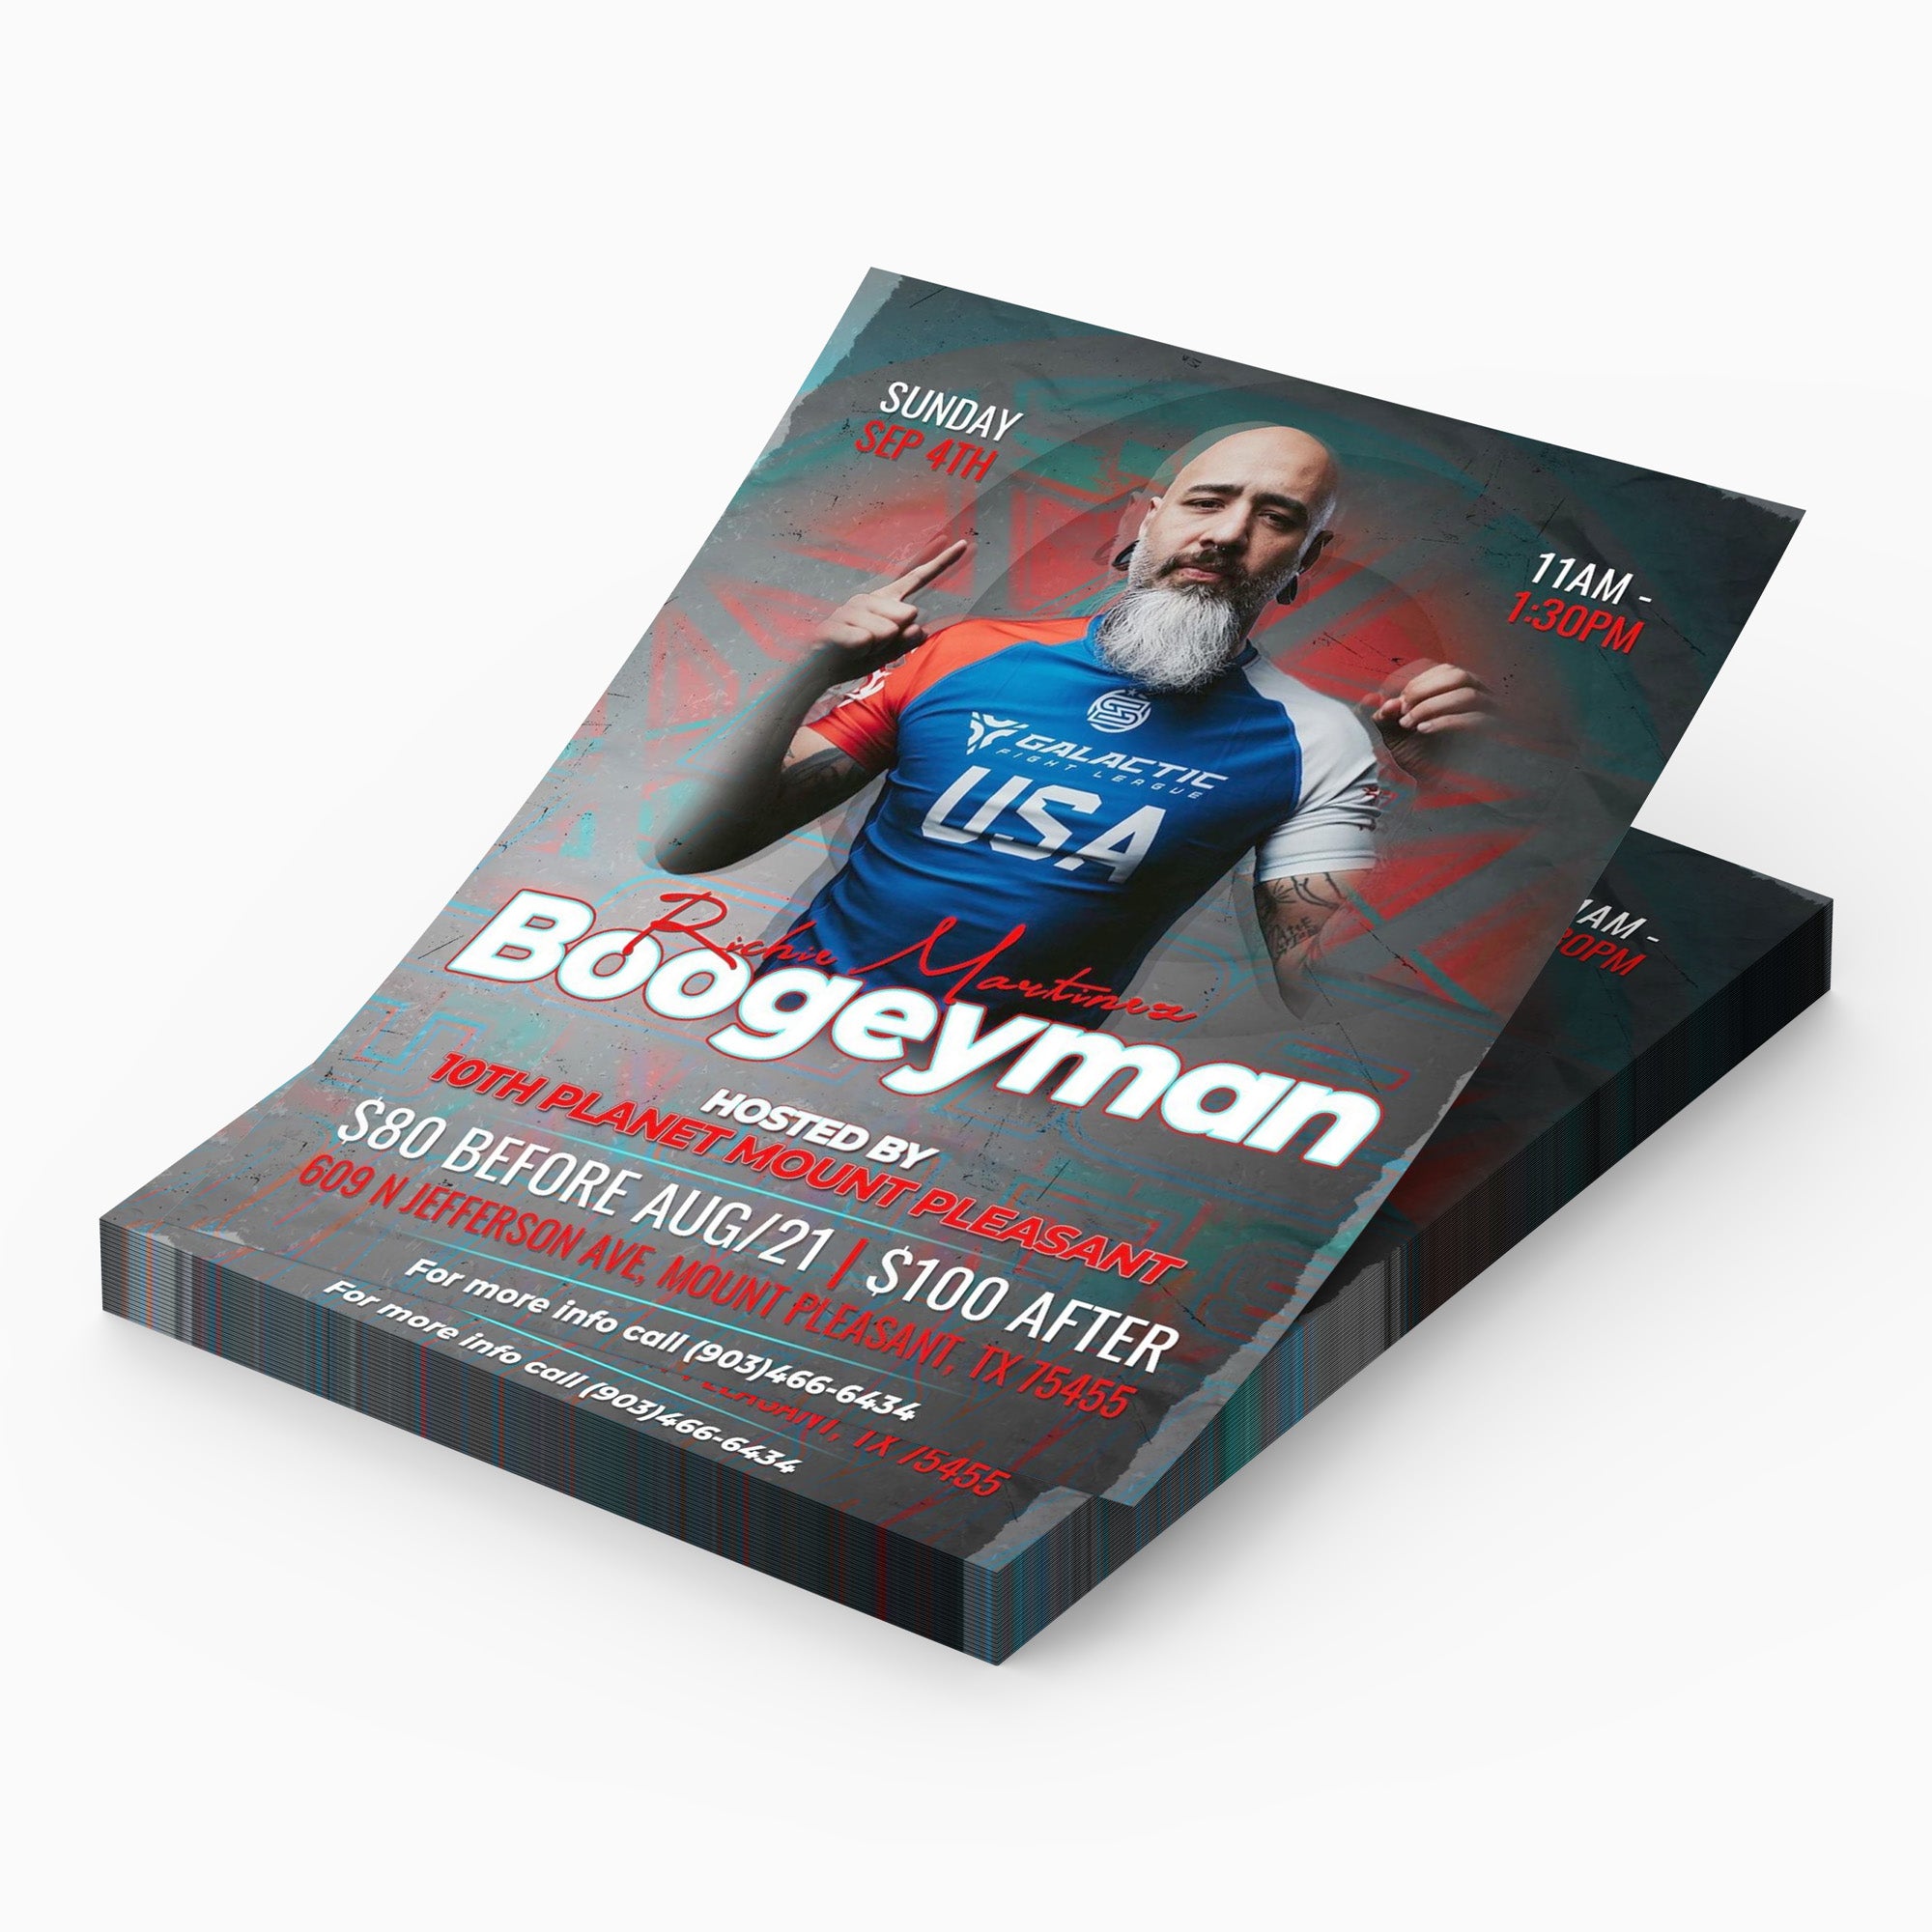 Jiu Jitsu Seminar Flyer Mockup for Boogeyman 10th Planet Oceanside by Eagr Ones Graphic Design Services